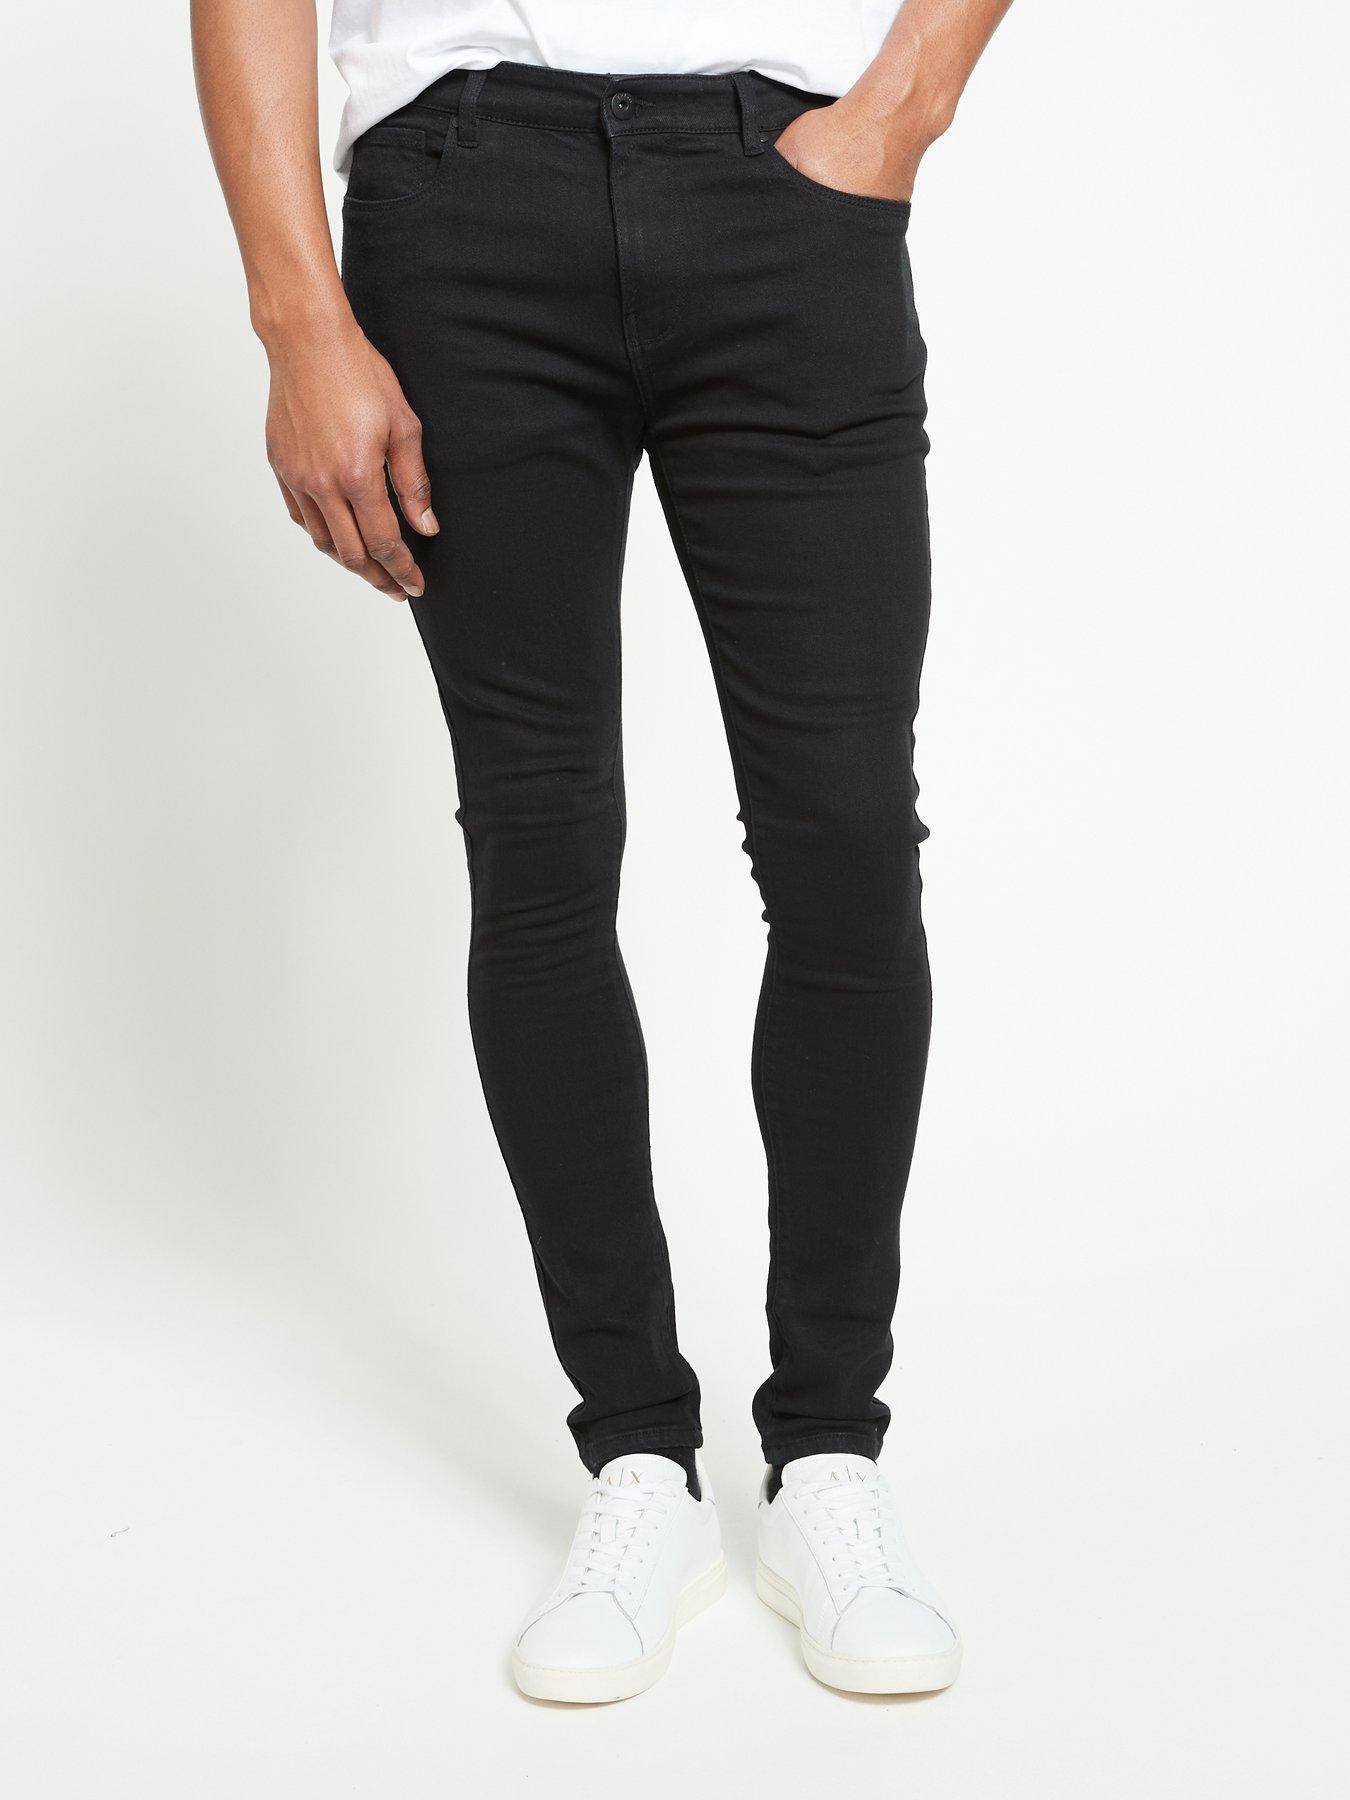 ASOS DESIGN lightweight jogger jeans in midwash